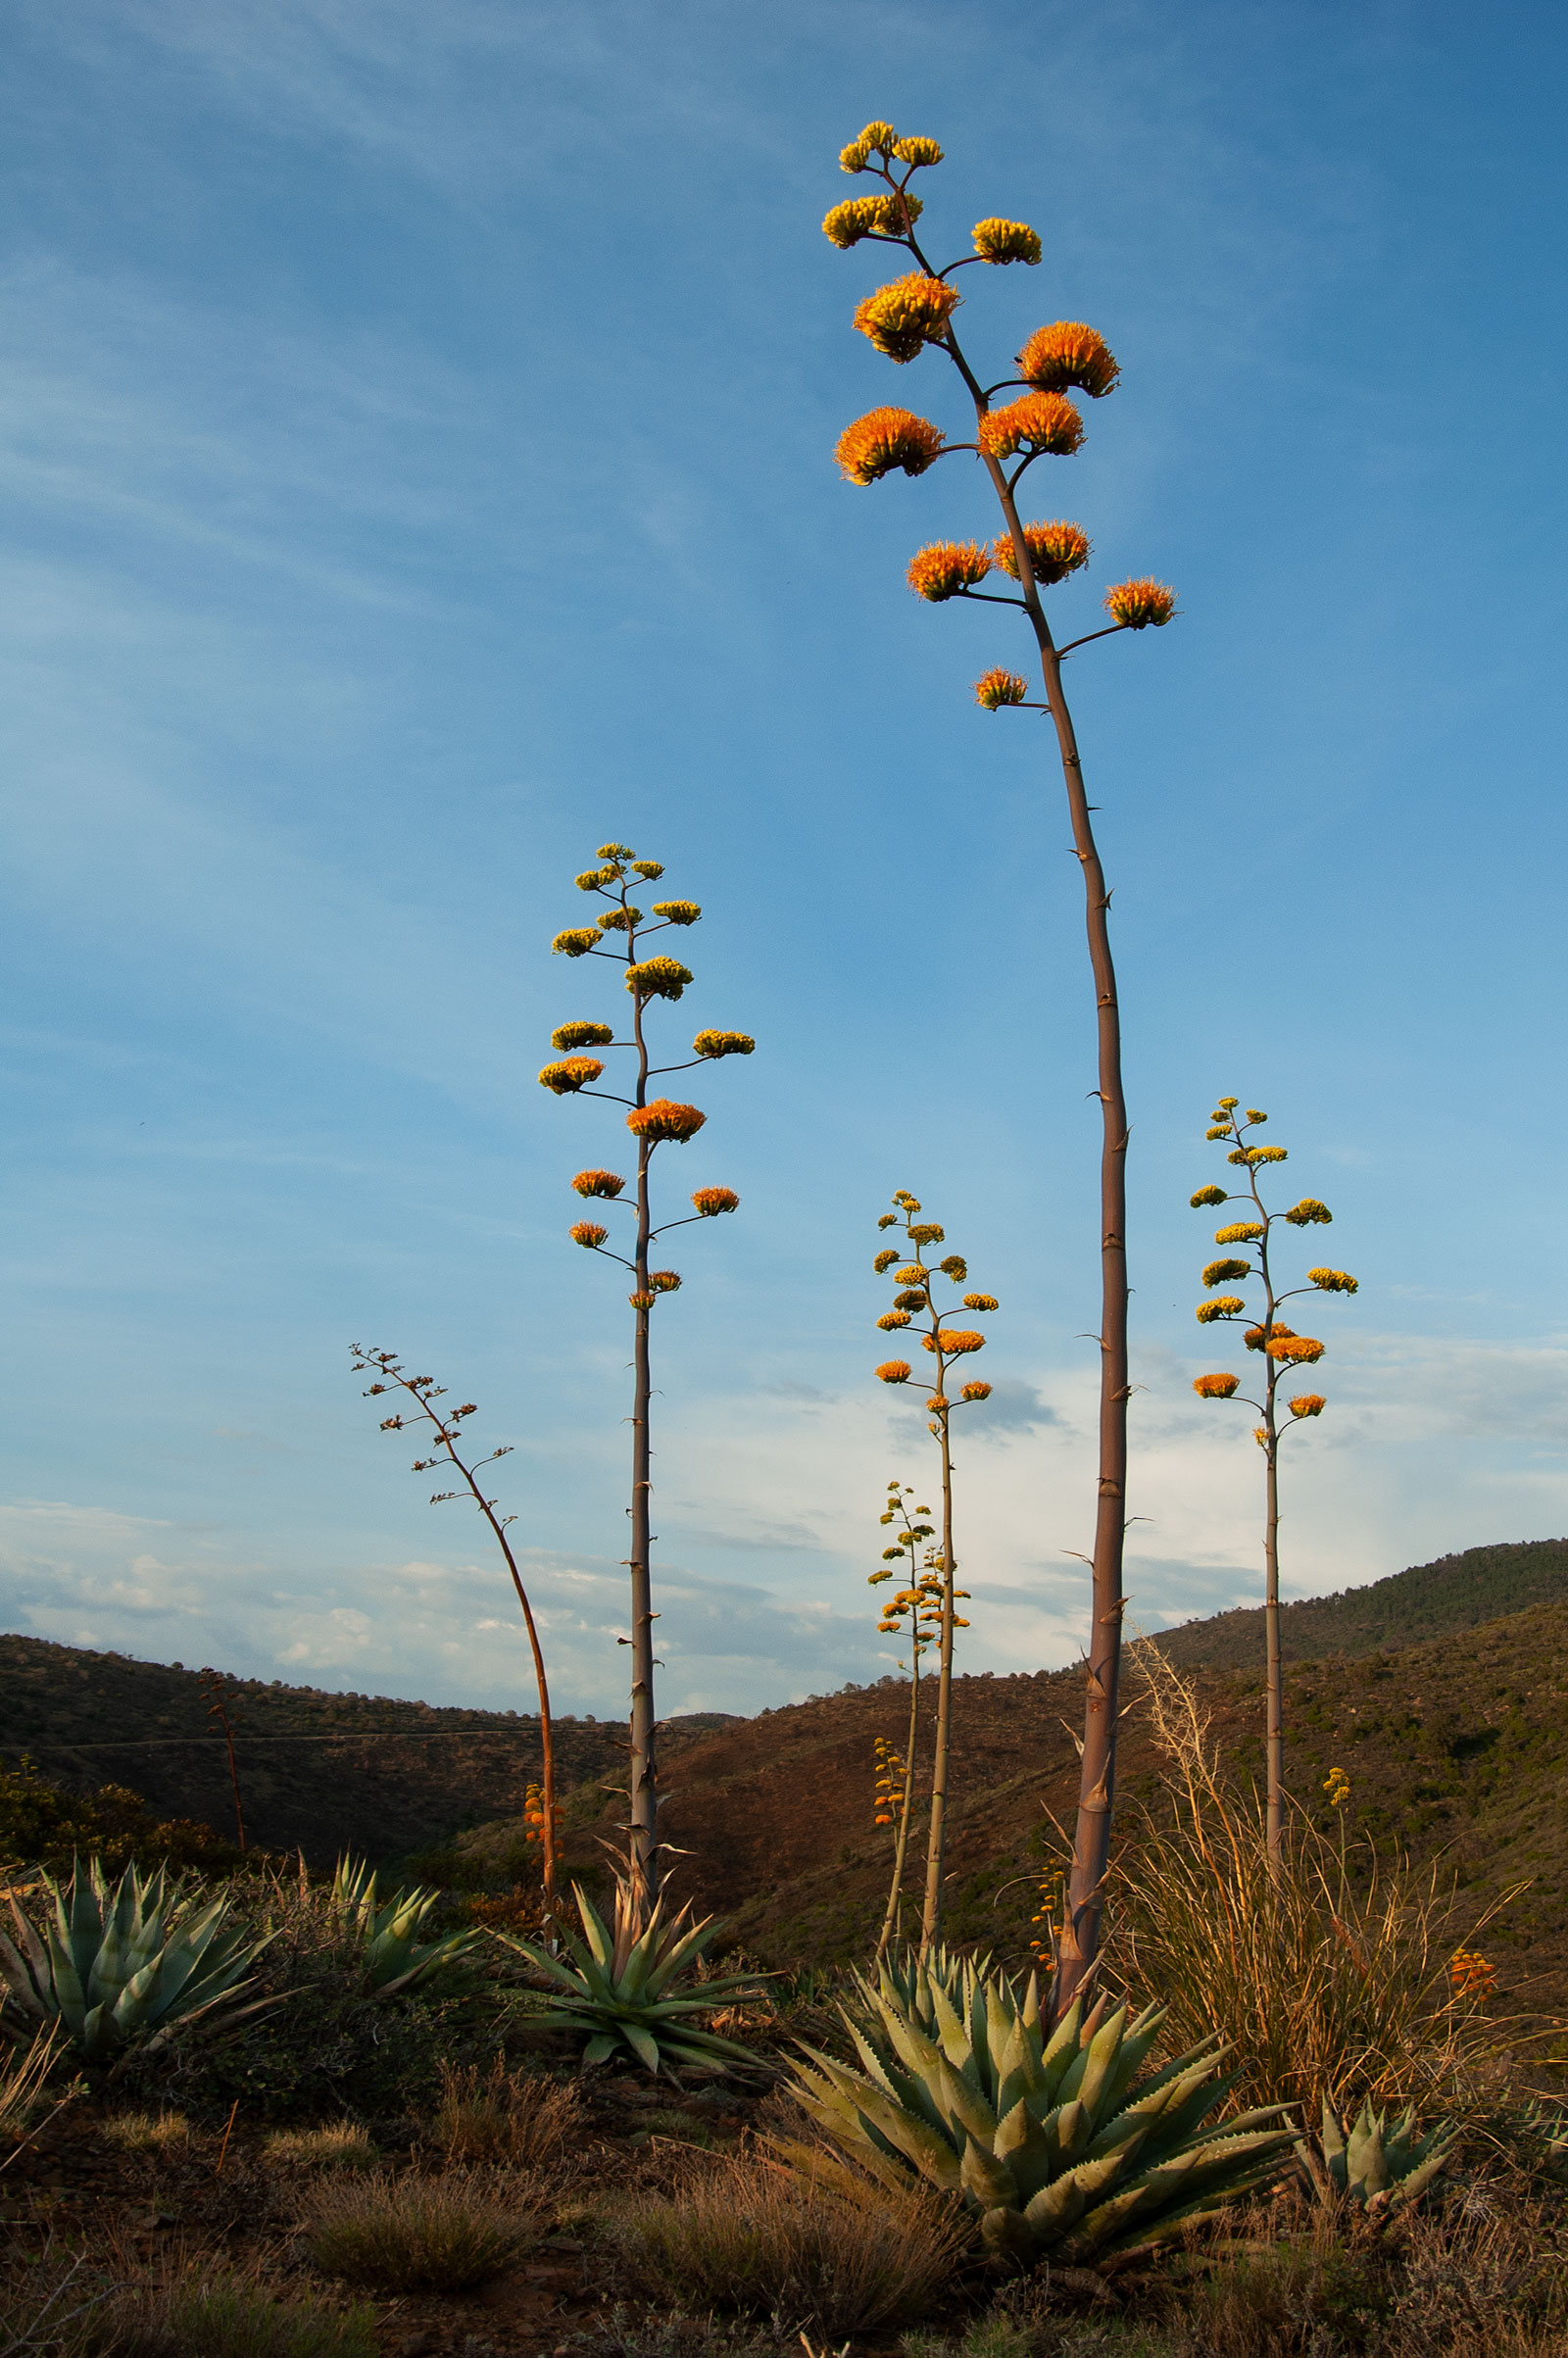 Century plants (Agave chrysantha) atop Mt. Ord in the Mazatzal Mts., Arizona